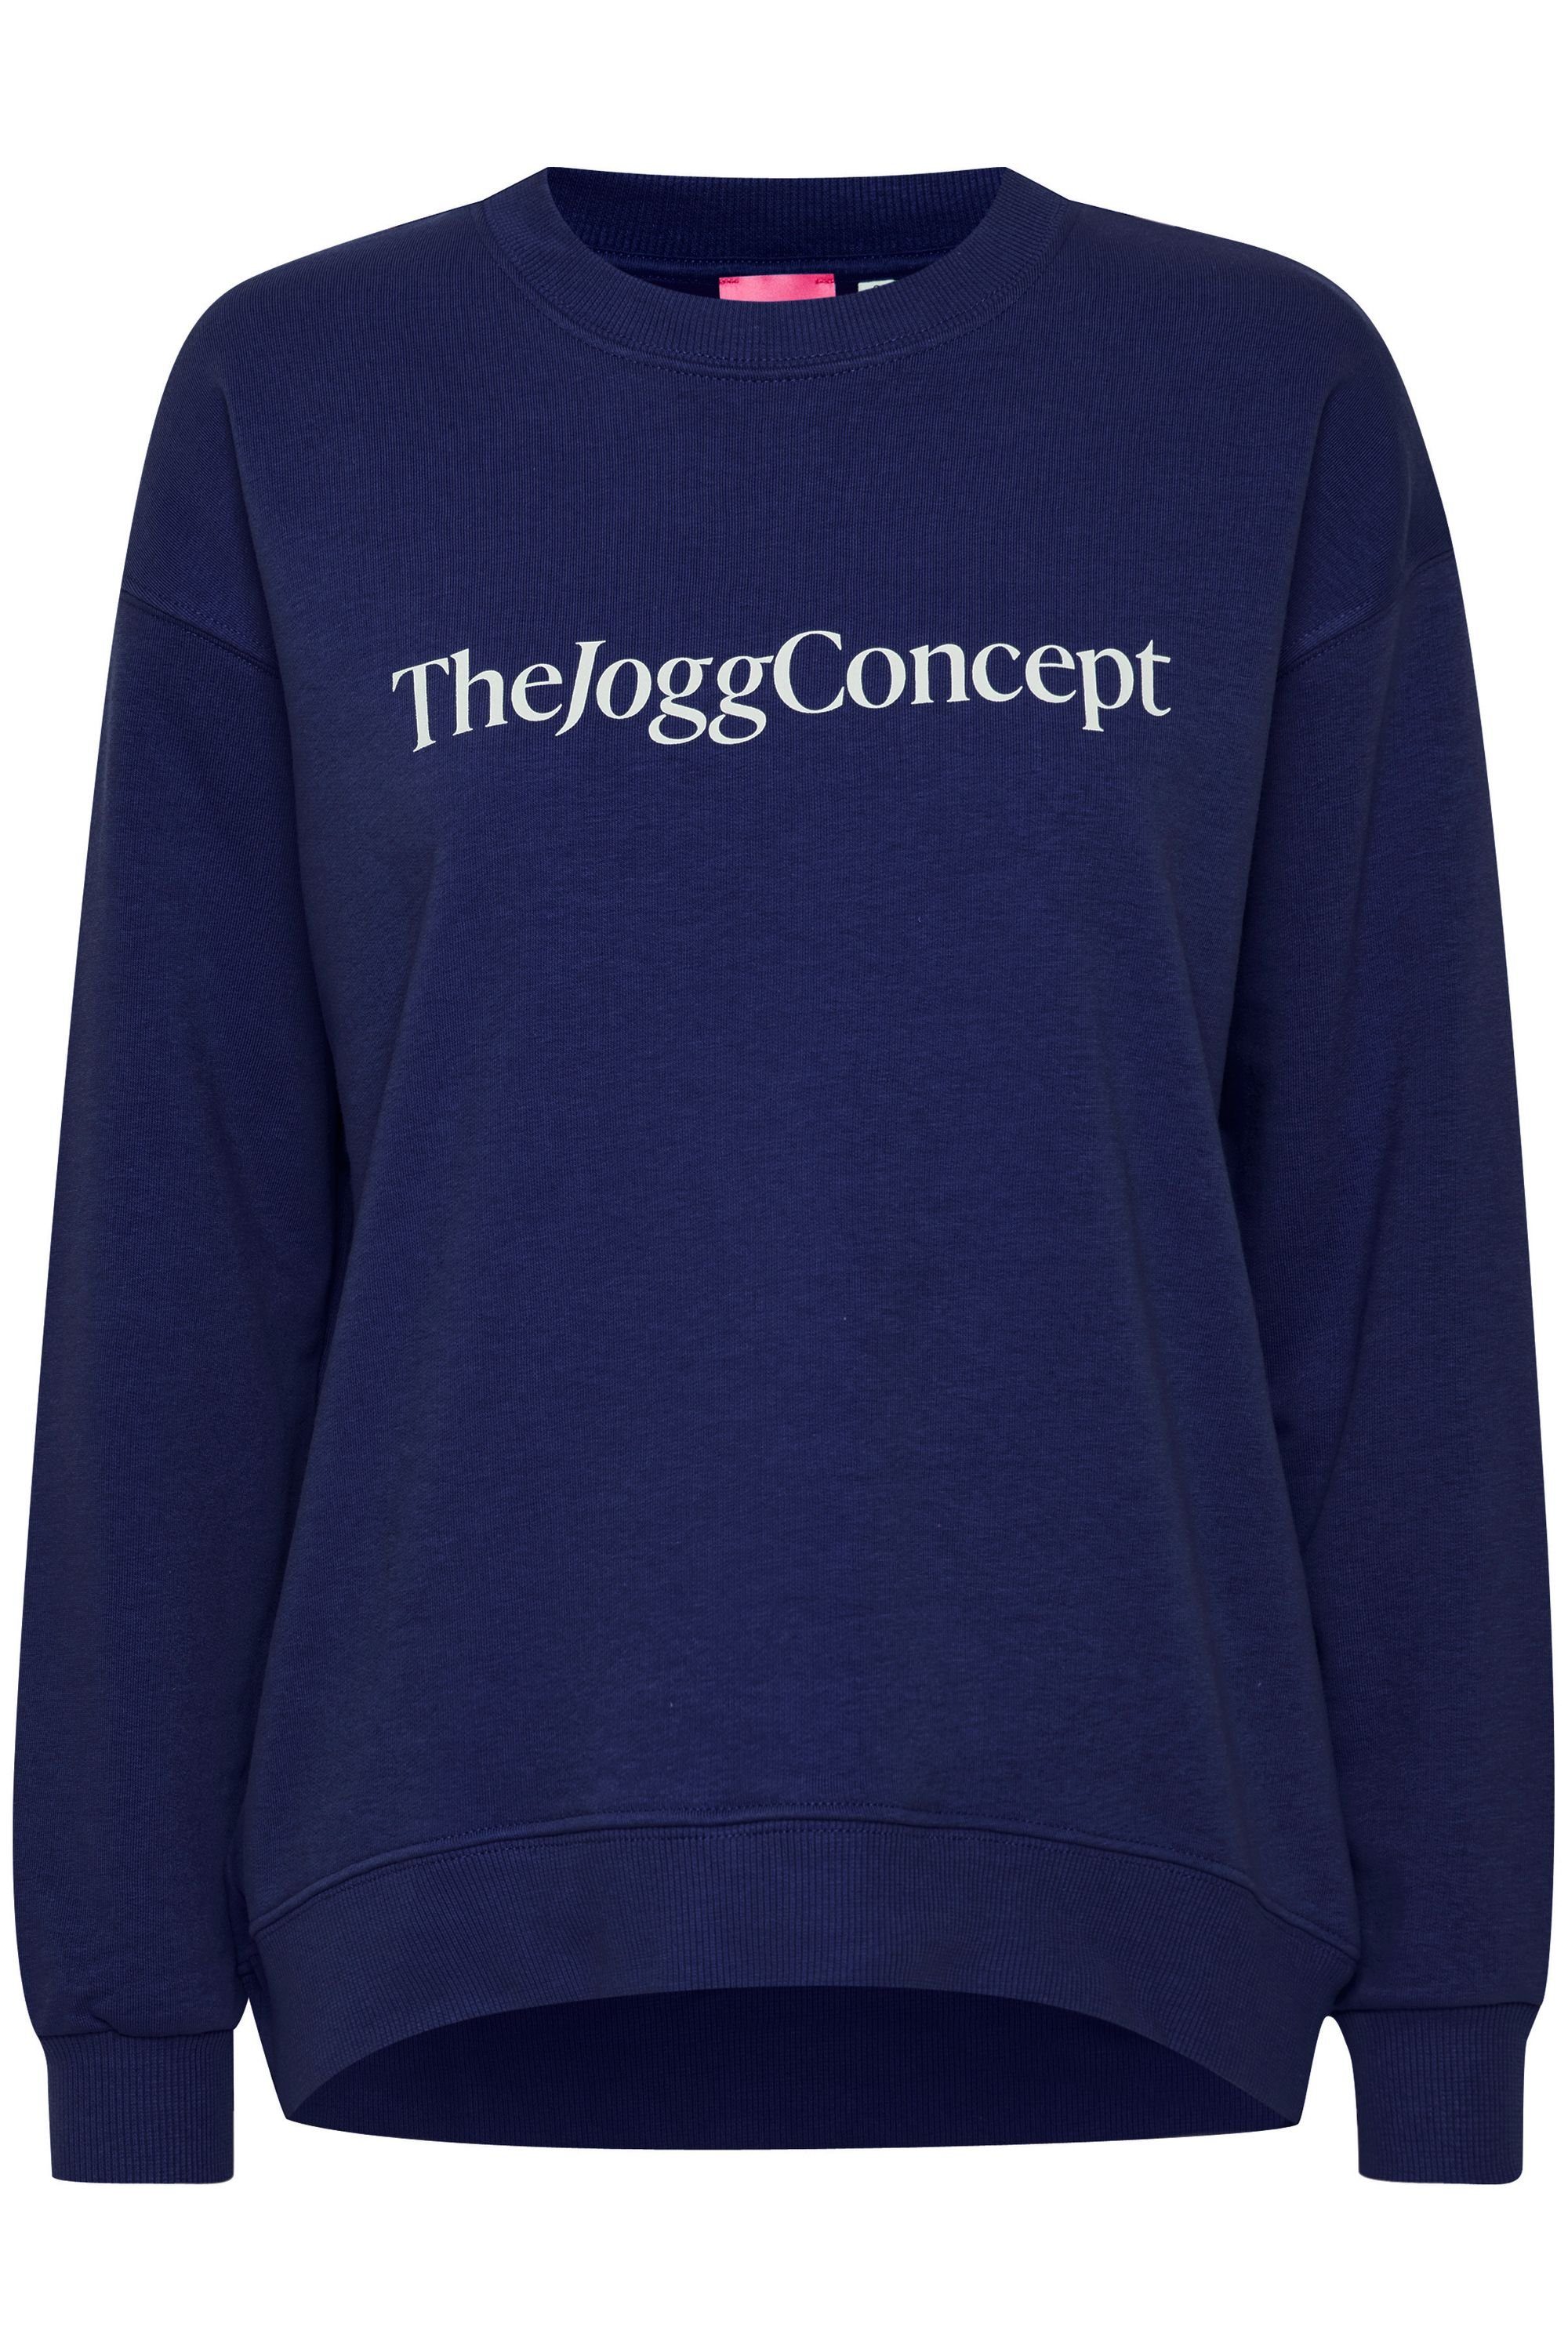 SWEATSHIRT Blue 22800015 Medieval JCSAFINE TheJoggConcept. (193933) Sweatshirt -